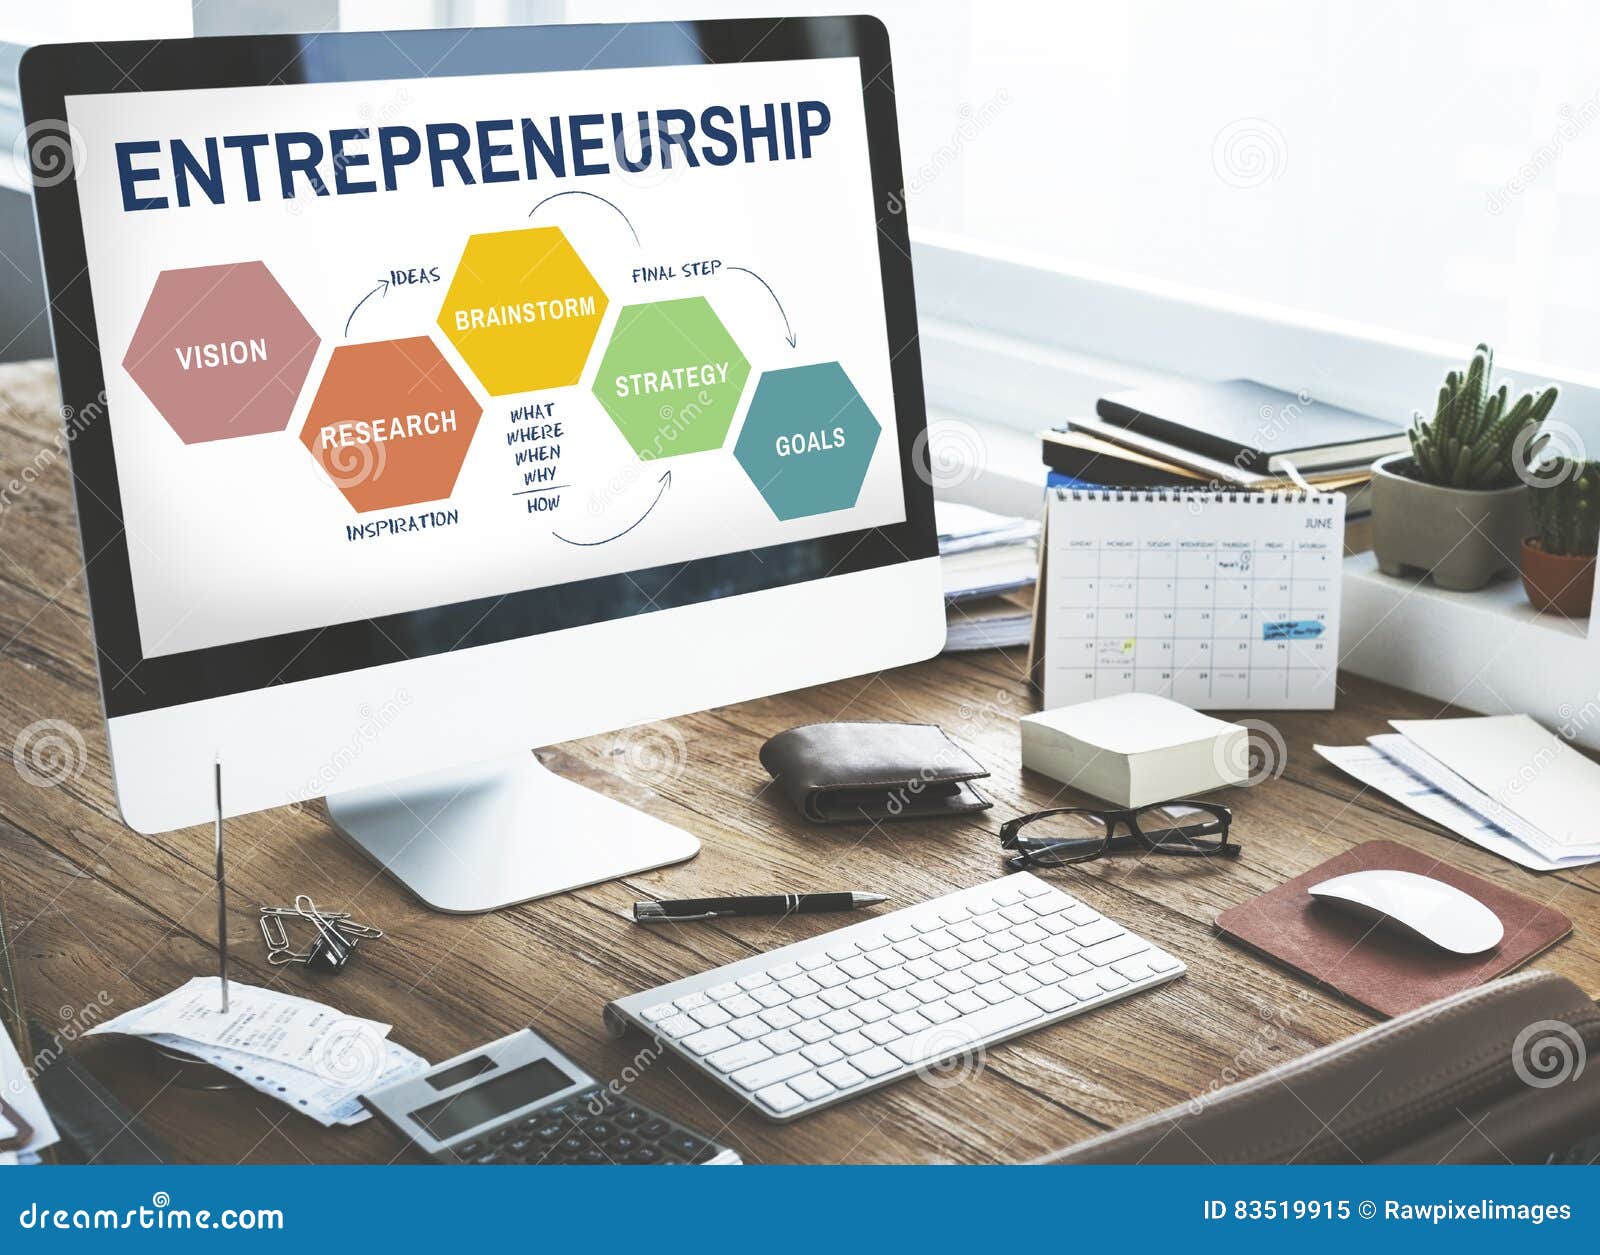 entrepreneurship strategey business plan brainstorming graphic c